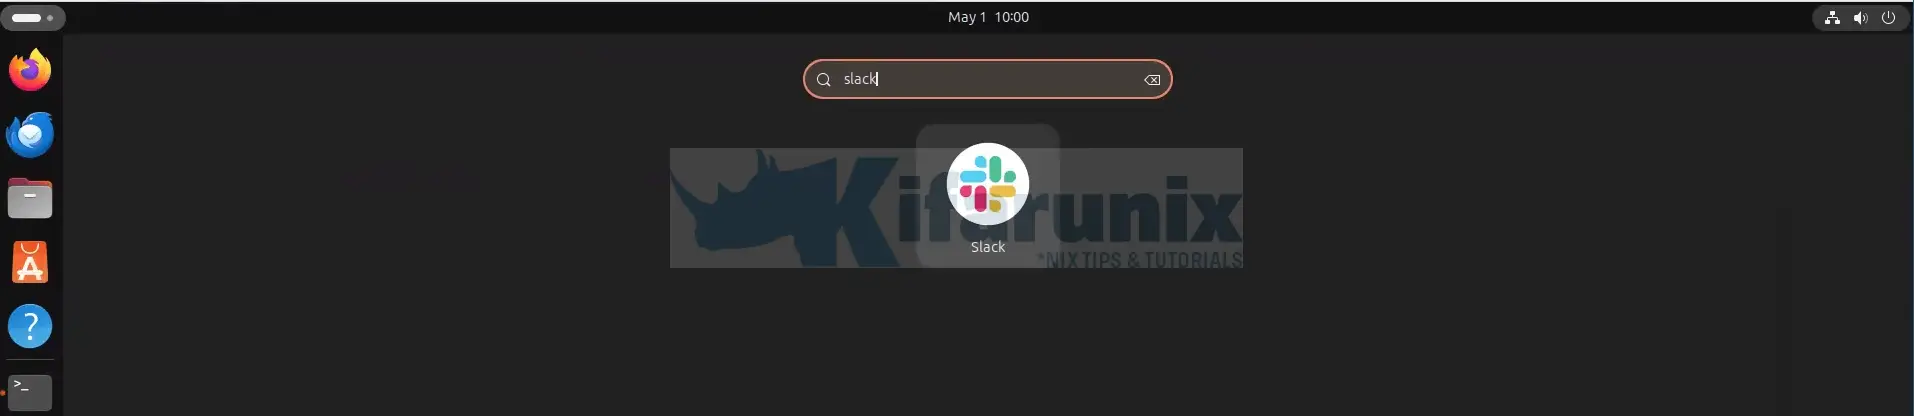 slack ubuntu 24.04